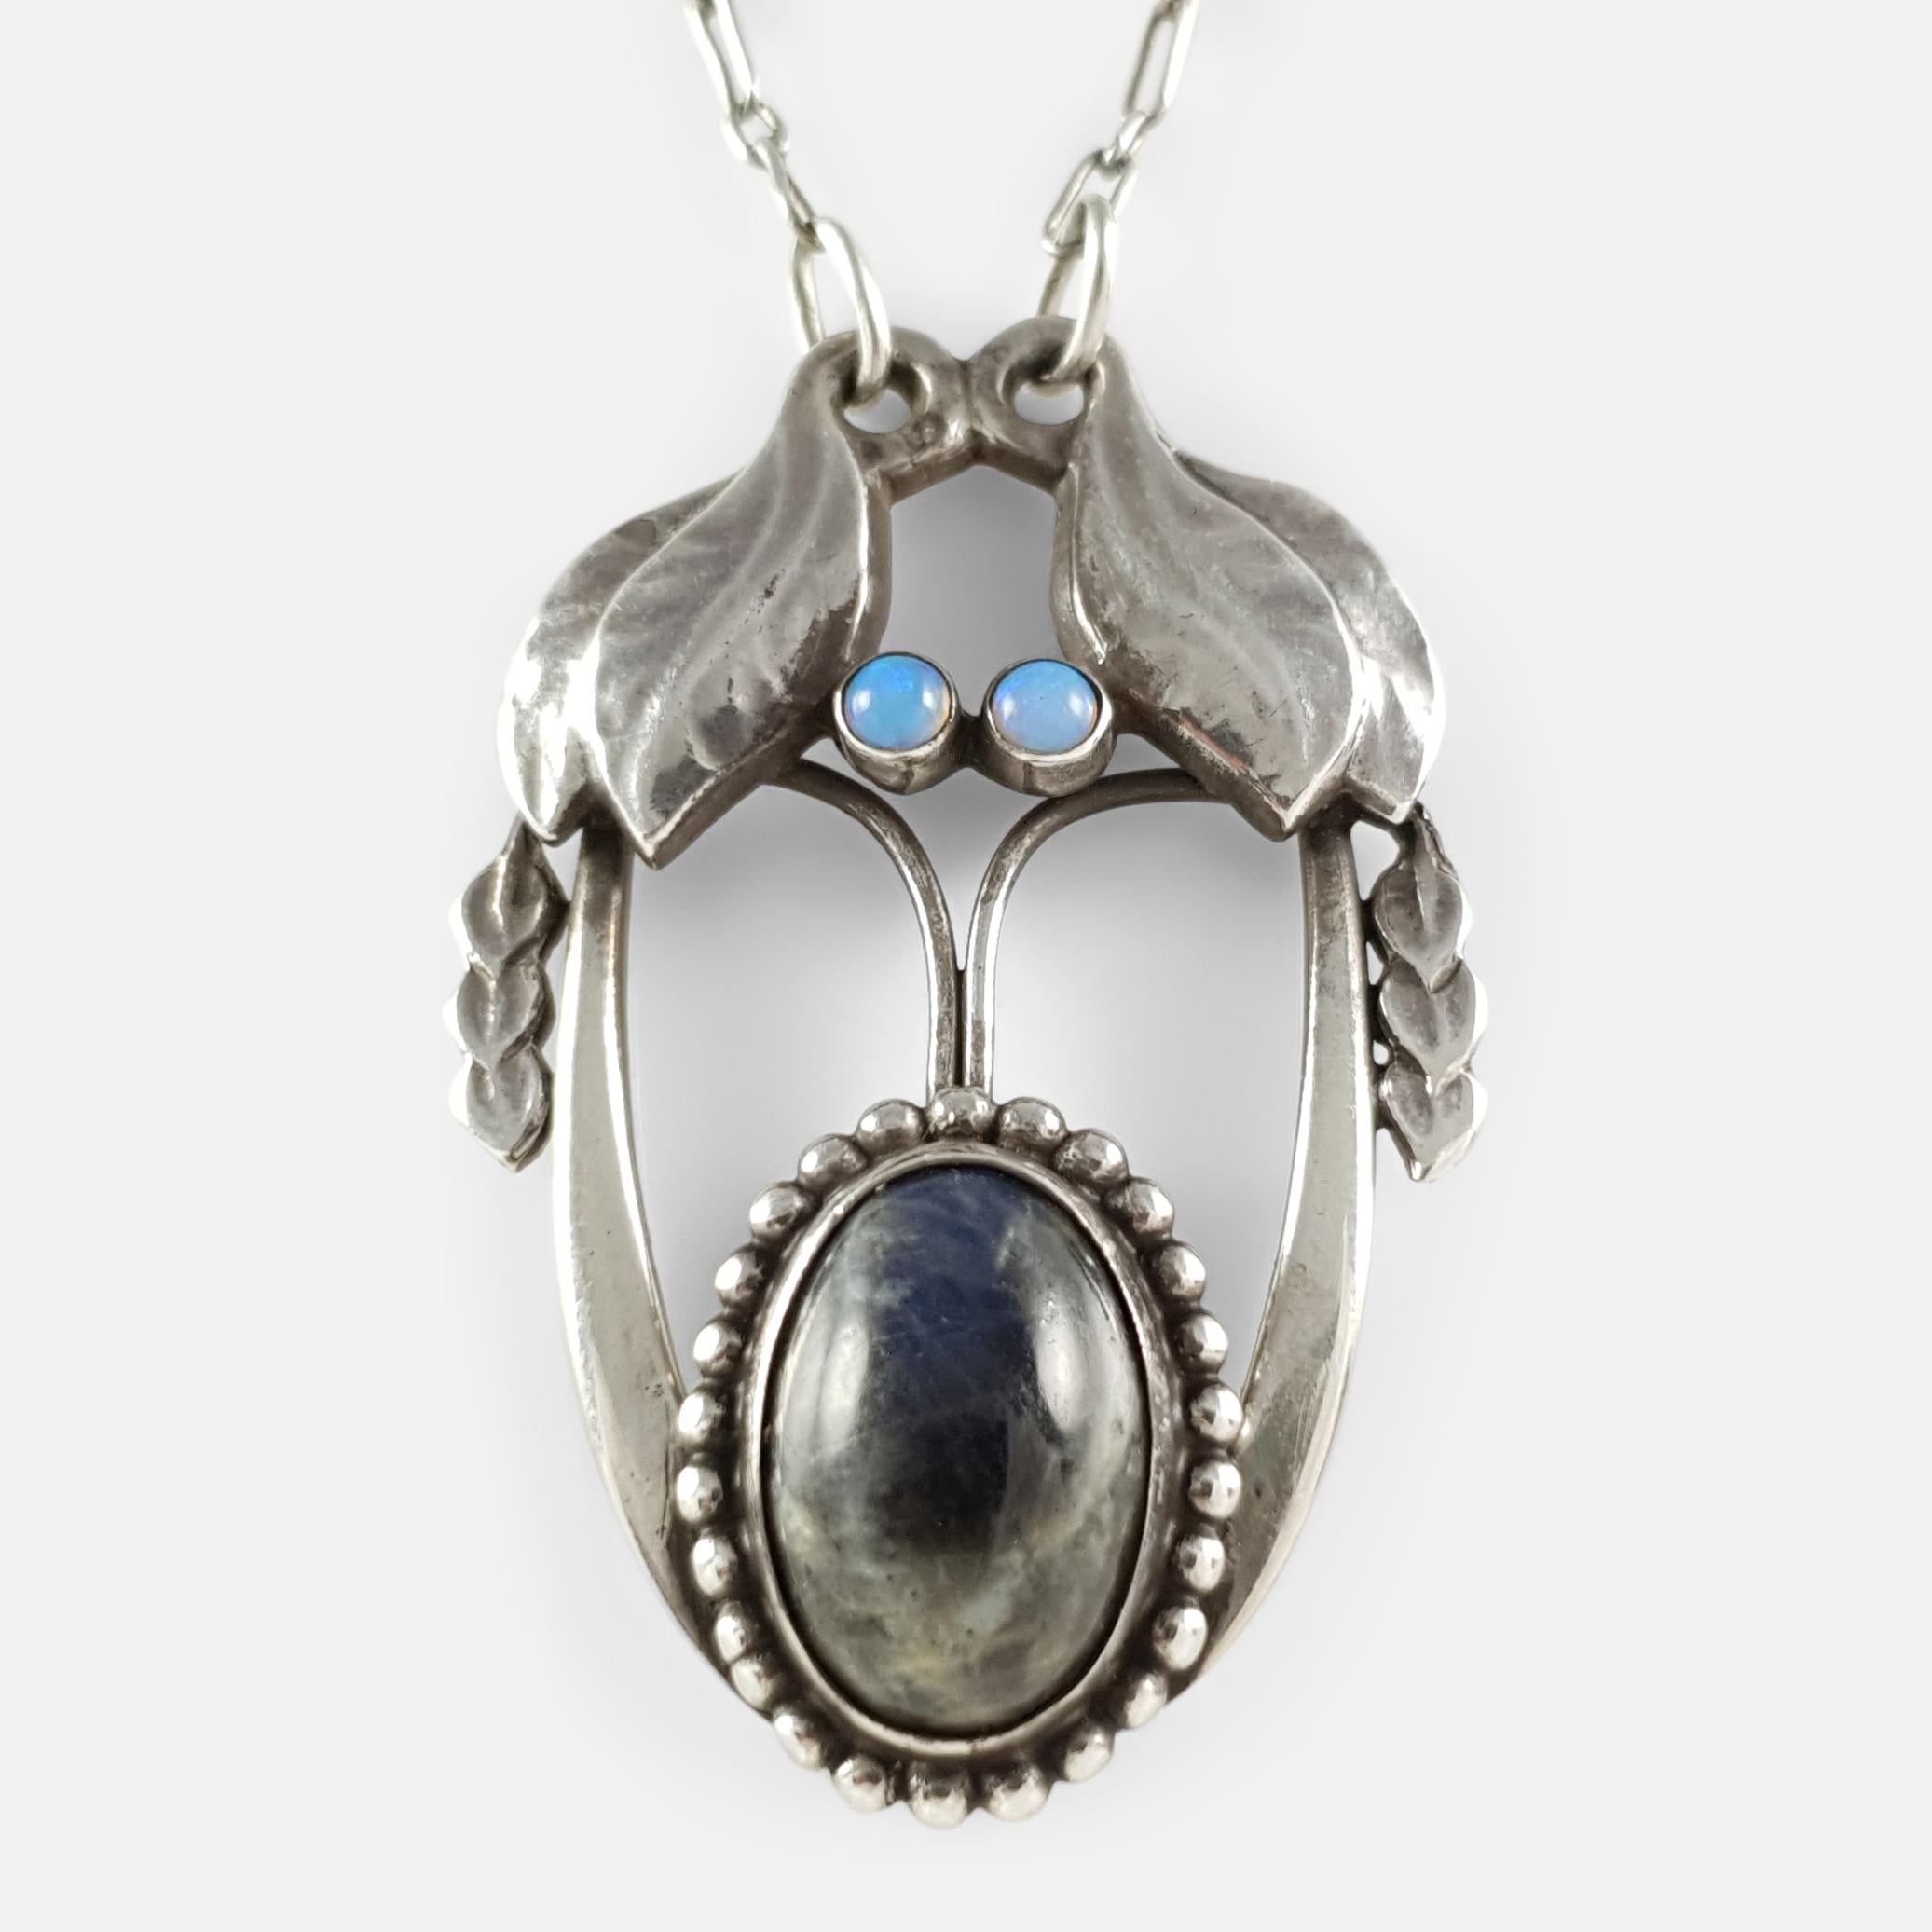 Georg Jensen Silver Opal and Labradorite Cabochon Pendant Necklace #4 c1904-1908 For Sale 1